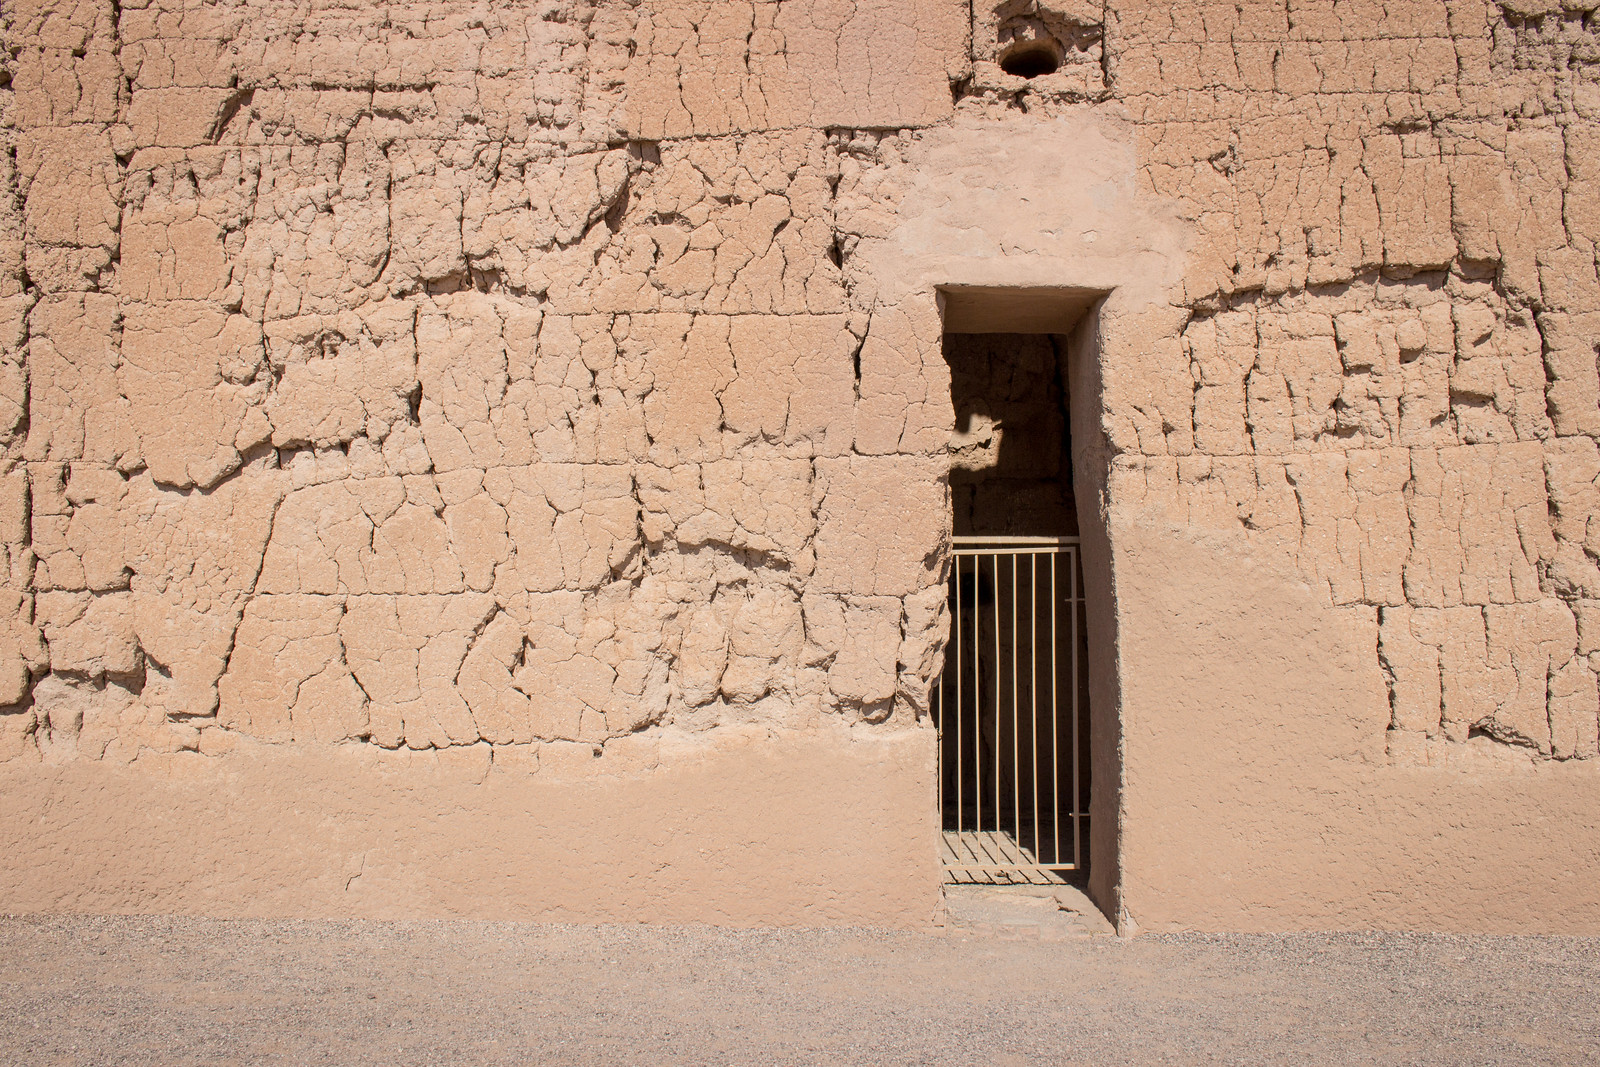 The sun illuminates a tall doorway in an earthen wall